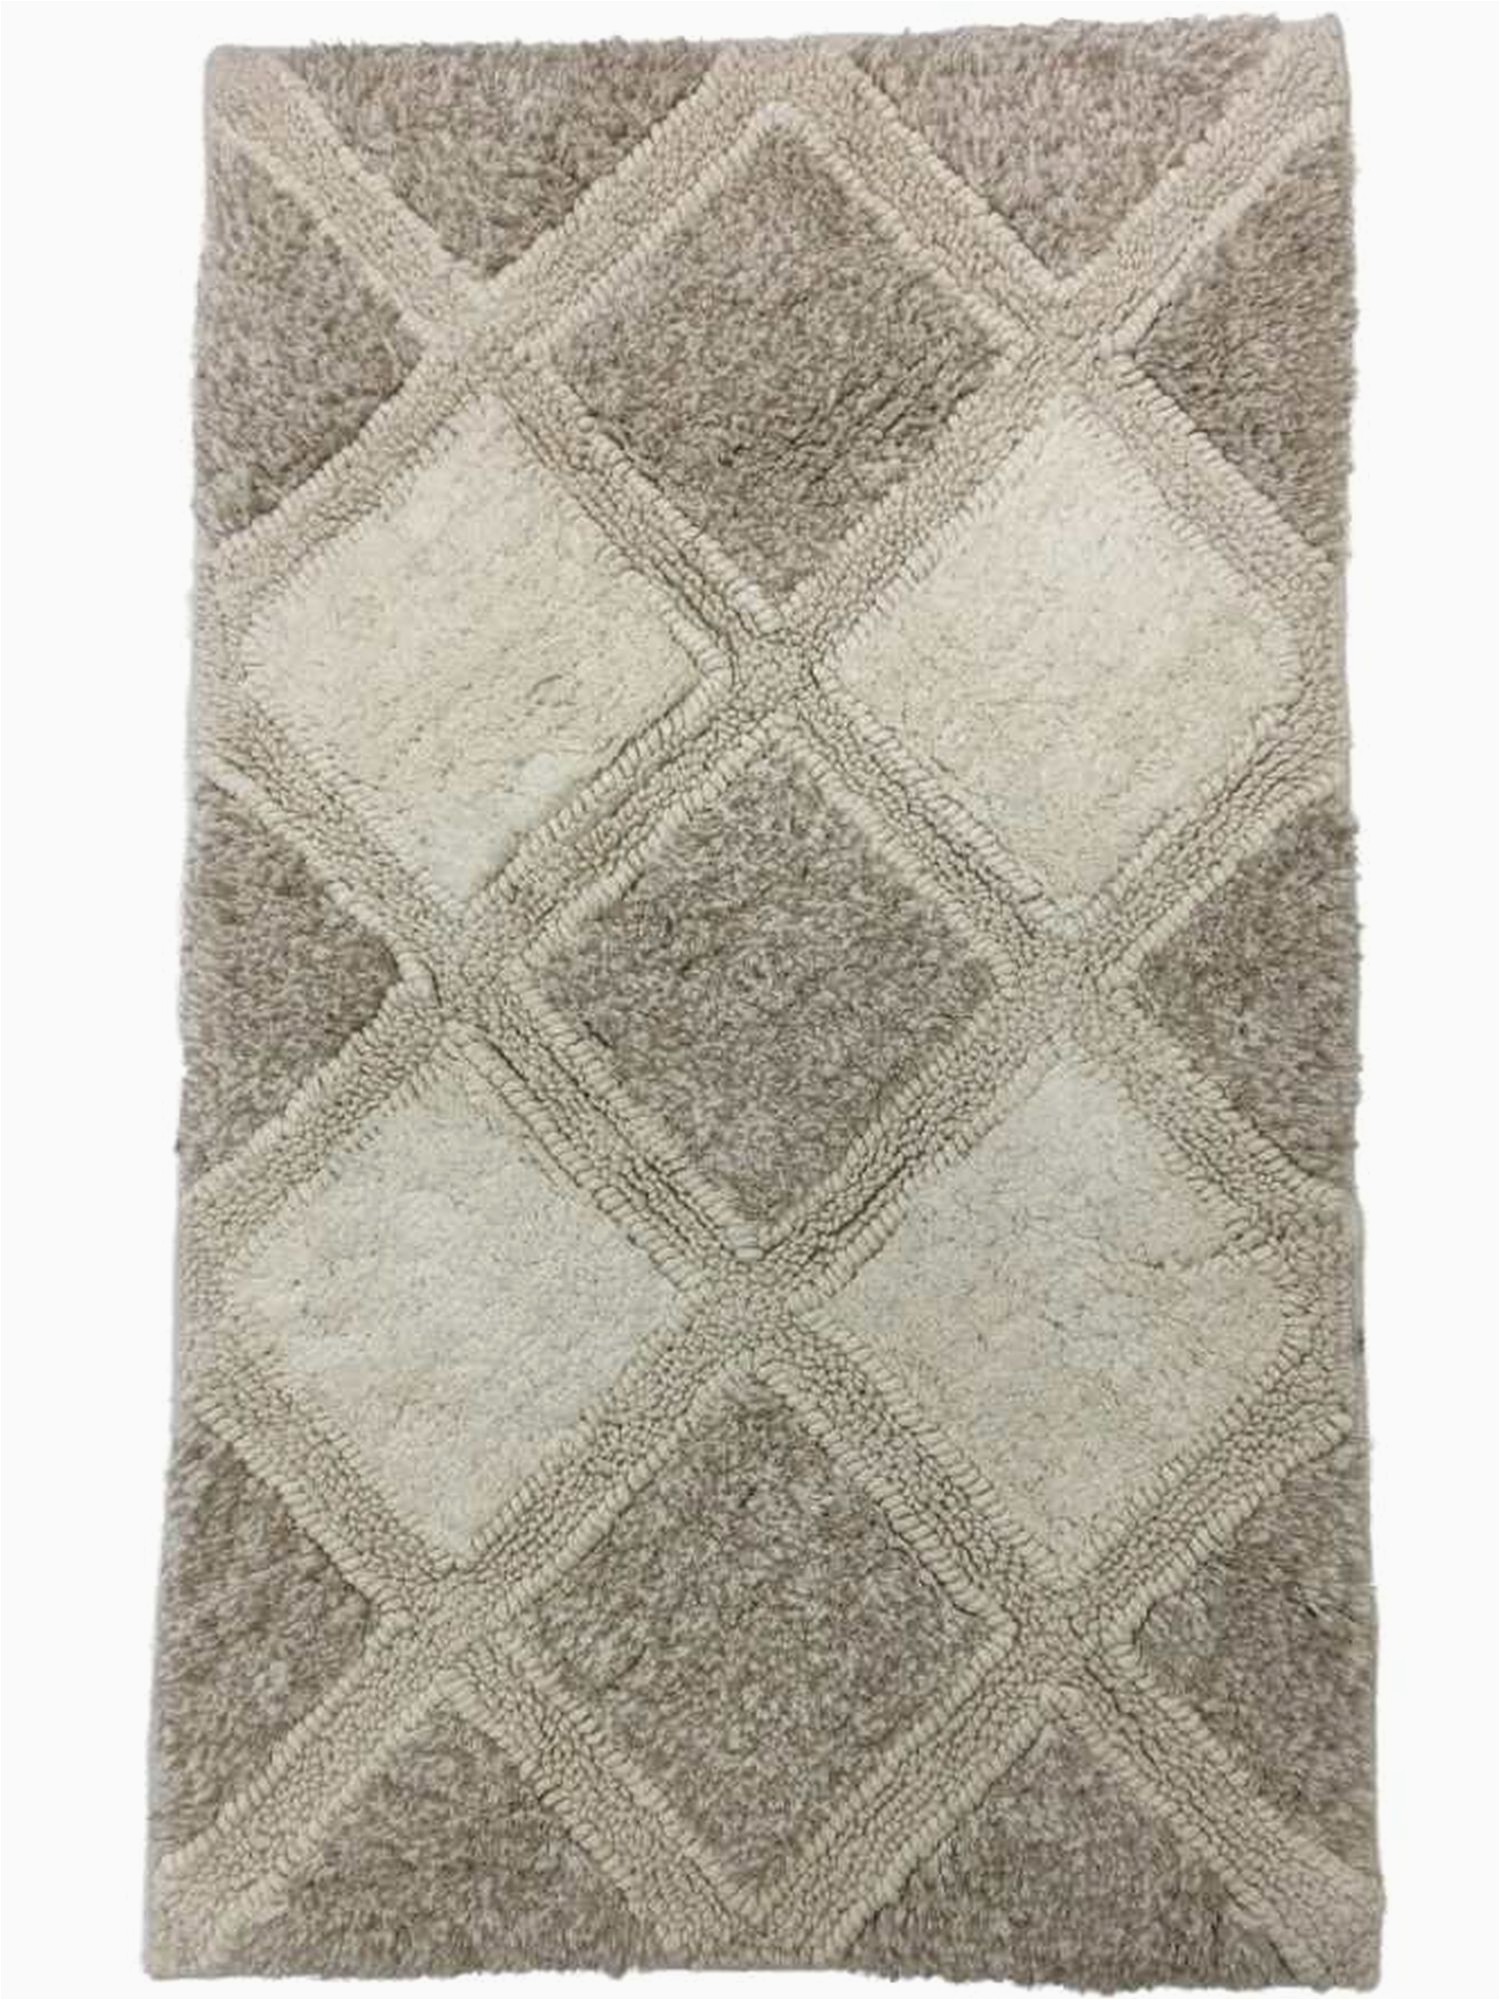 Grey and Beige Bathroom Rugs Threshold Plush Ivory & Beige Geometric Textured Bath Rug Throw Mat 20×32 Walmart